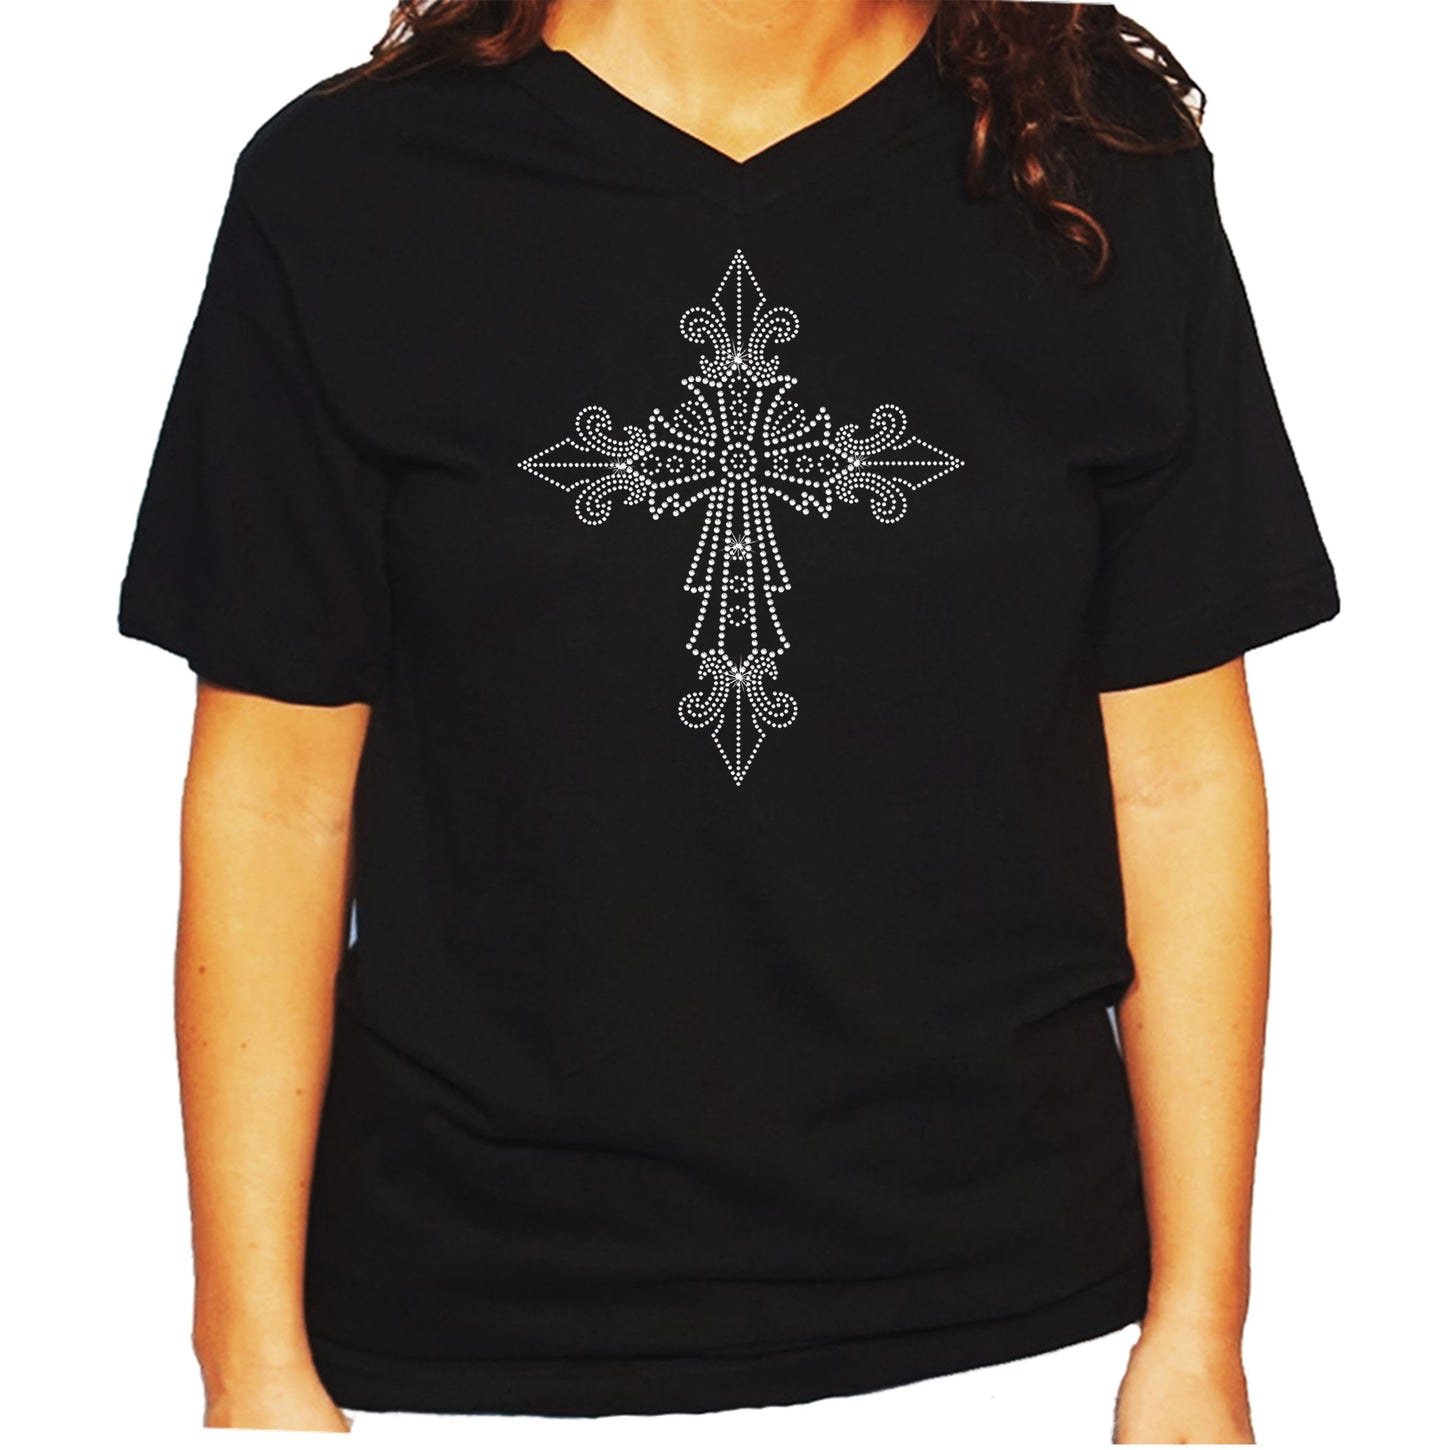 Women's/Unisex Rhinestone T-Shirt with Pointed Crystal Cross - Rhinestone Shirt, Jesus Bling